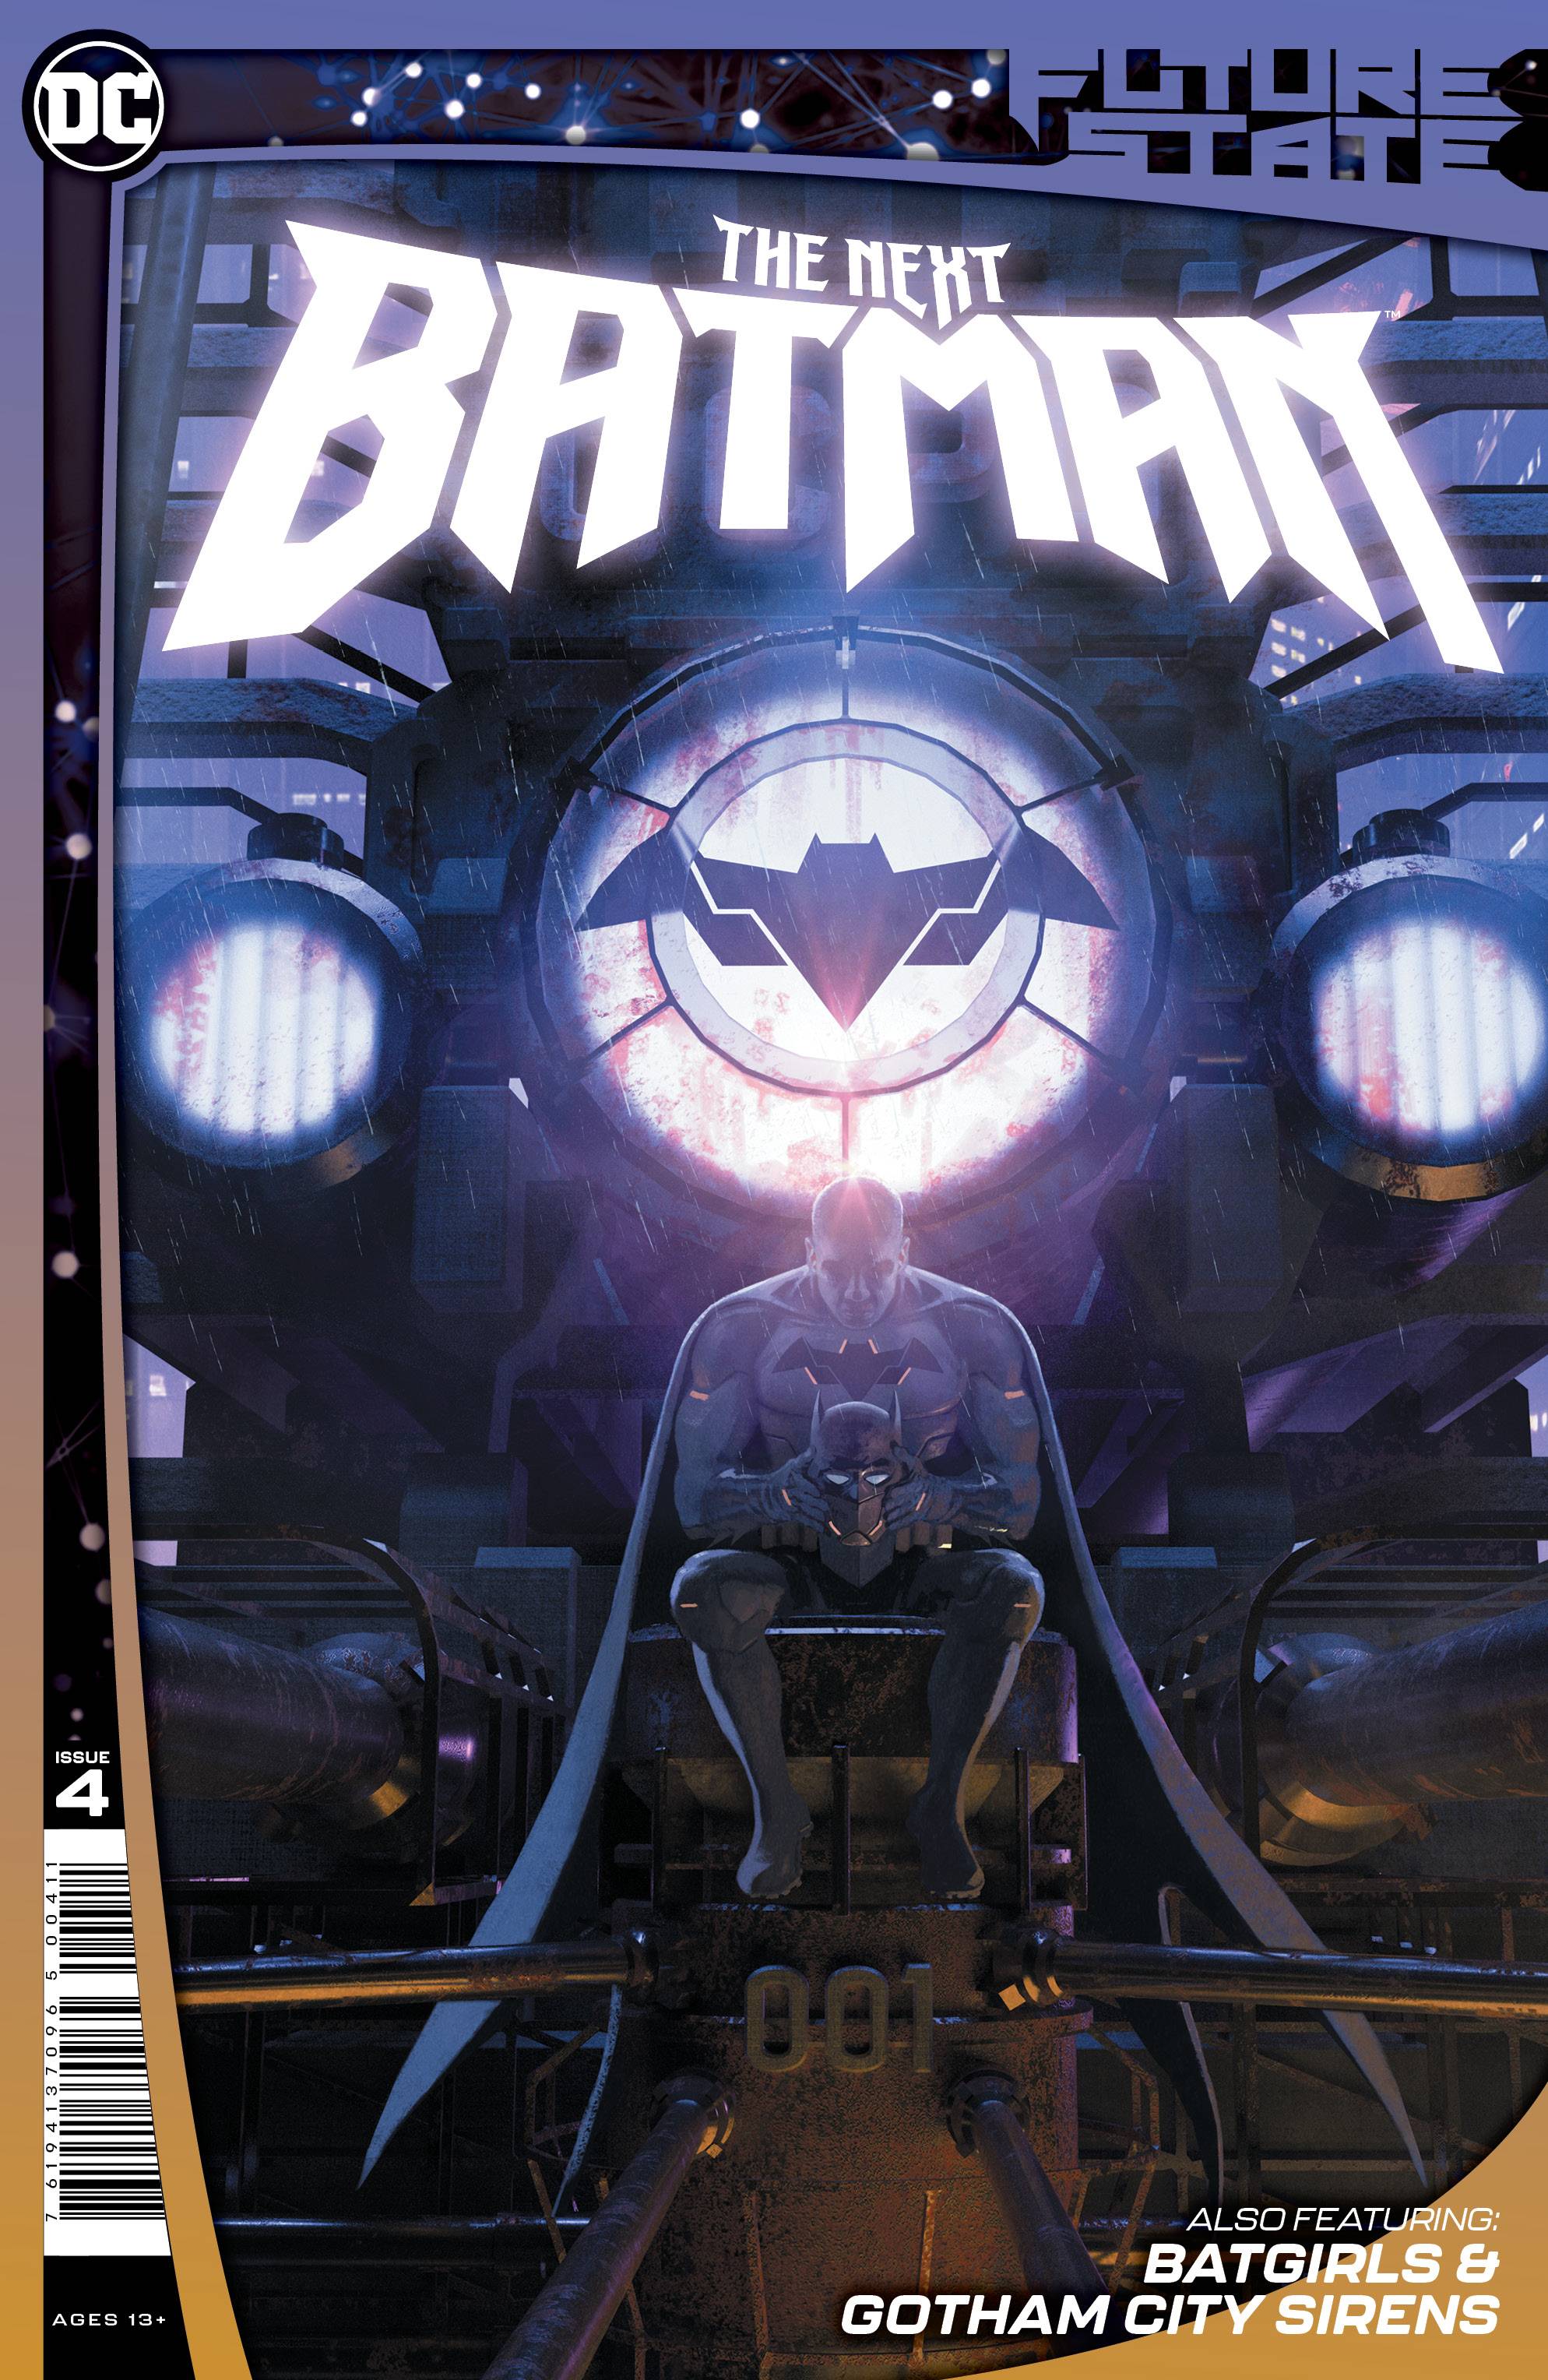 FUTURE STATE NEXT BATMAN #4 | Game Master's Emporium (The New GME)